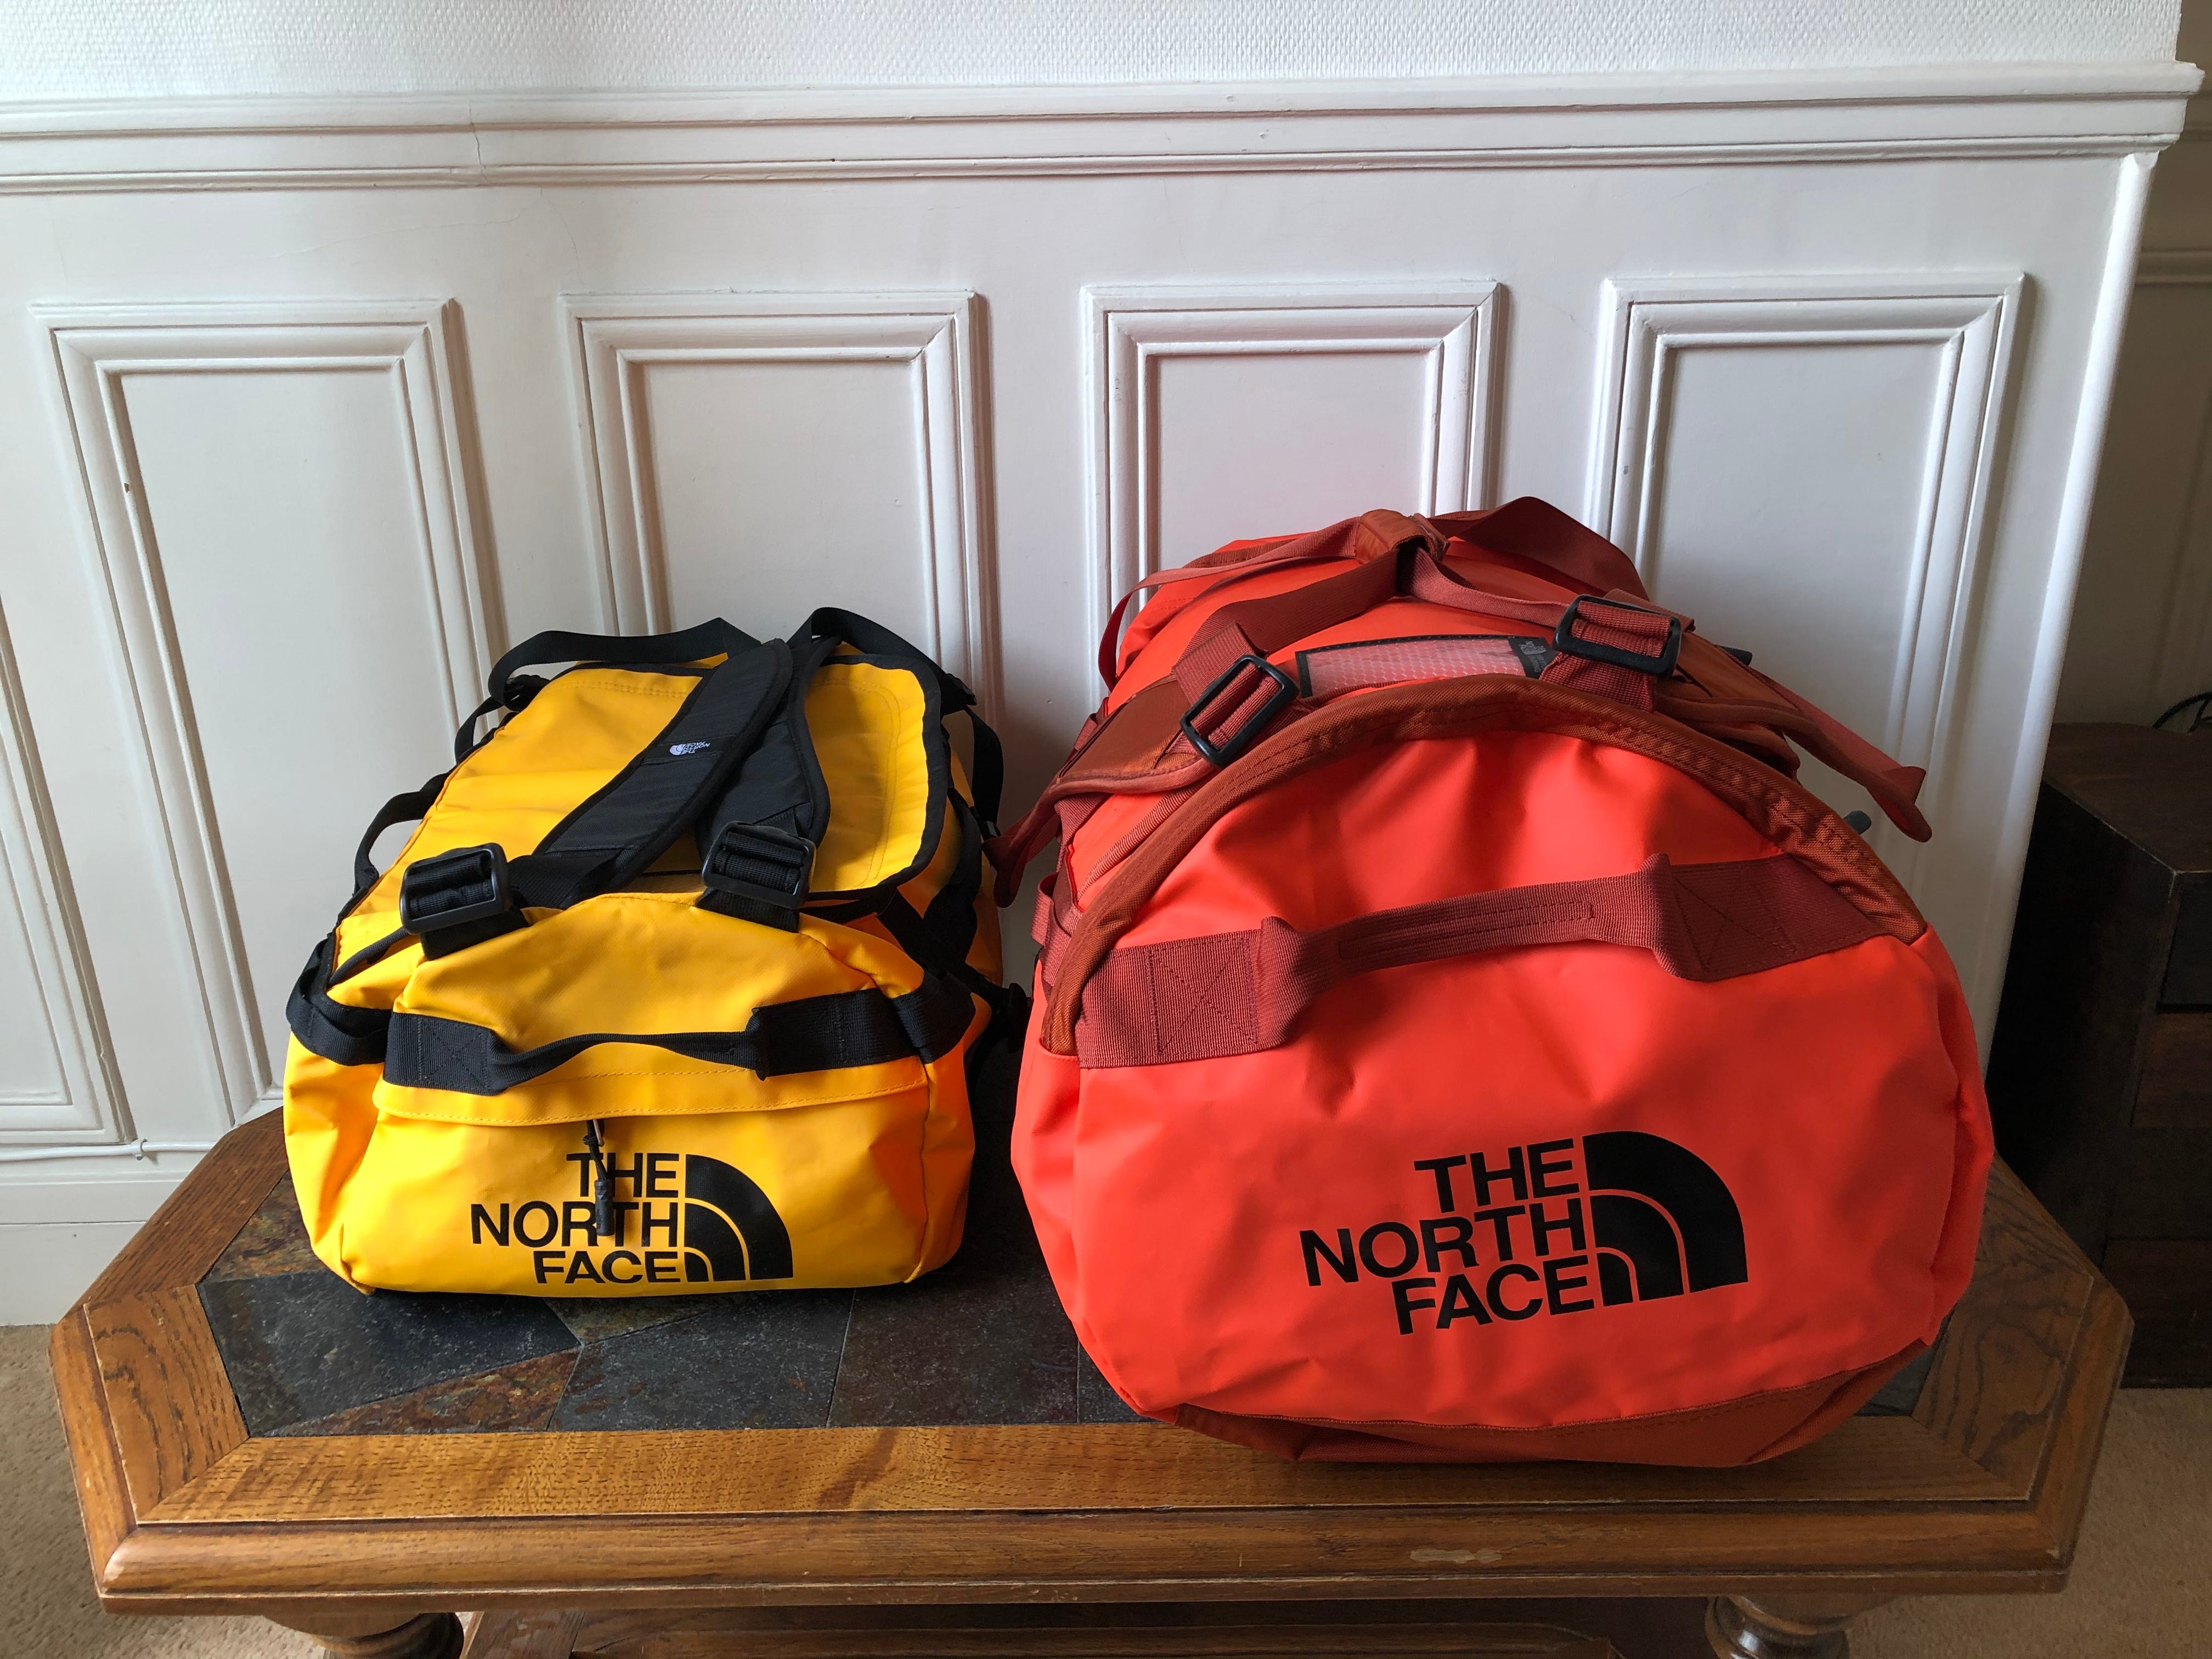 northface duffle bags